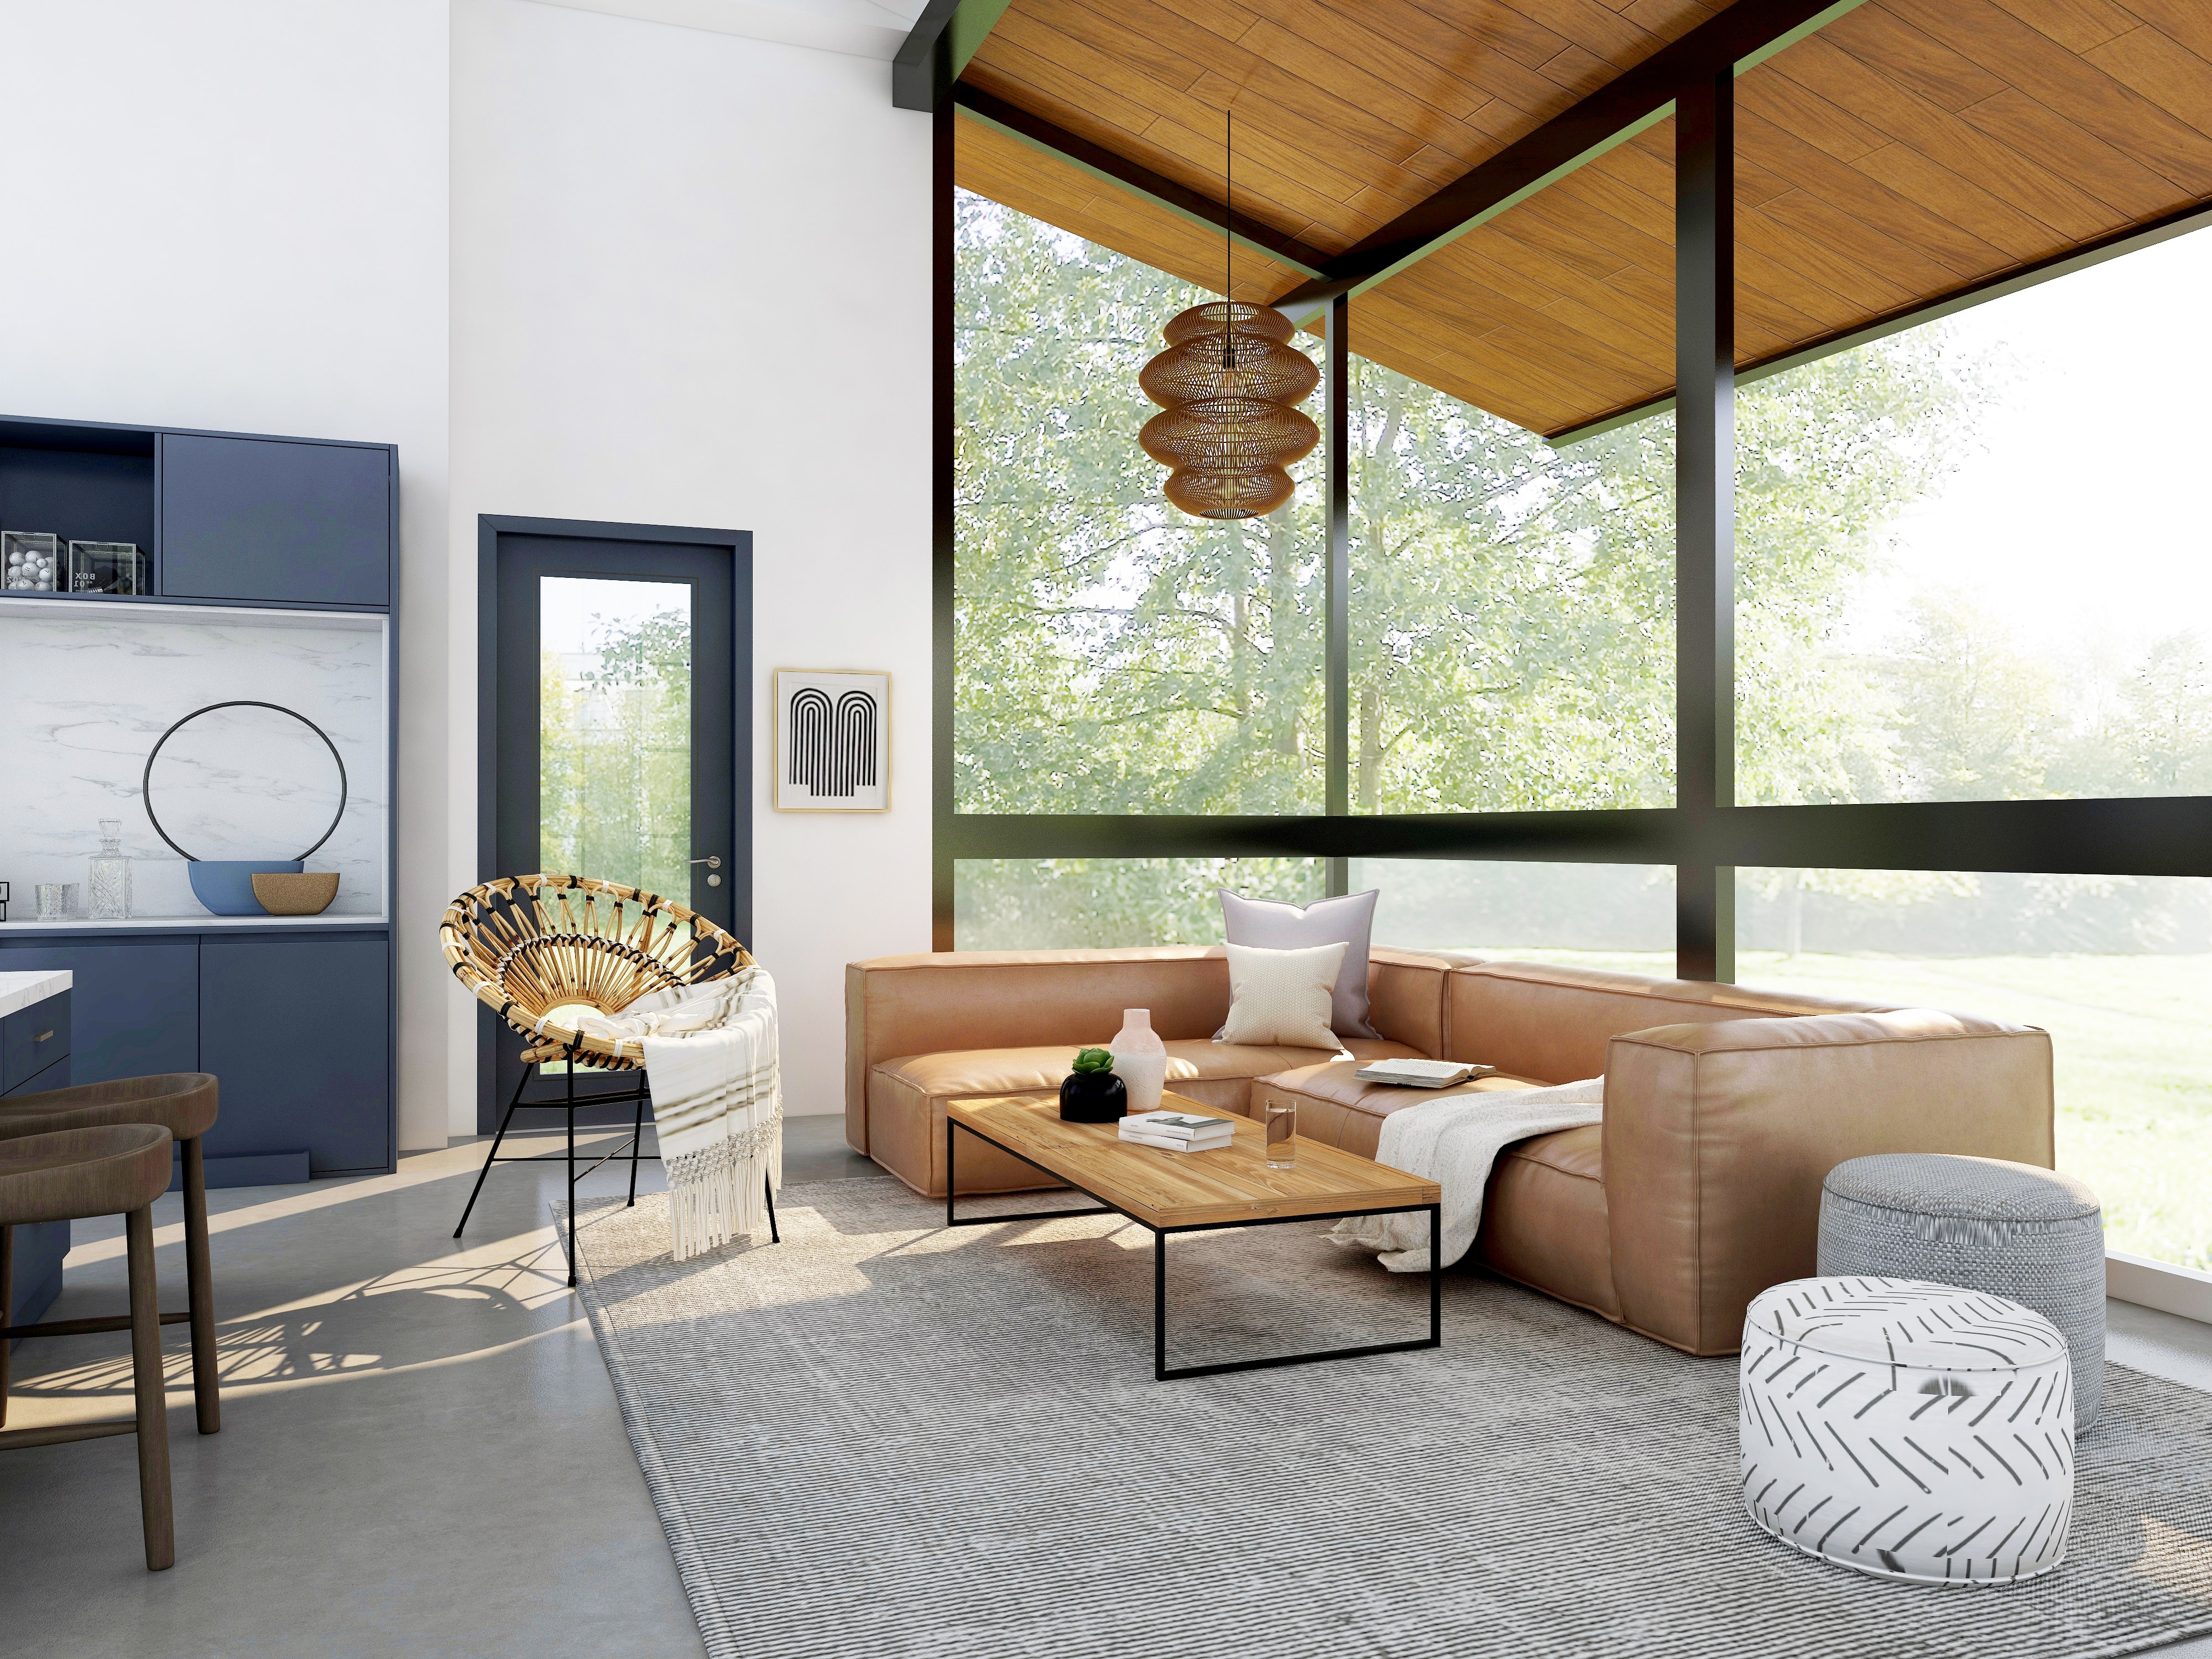 6 Steps for Styling an Organic Modern Home ~ Fresh Design Blog